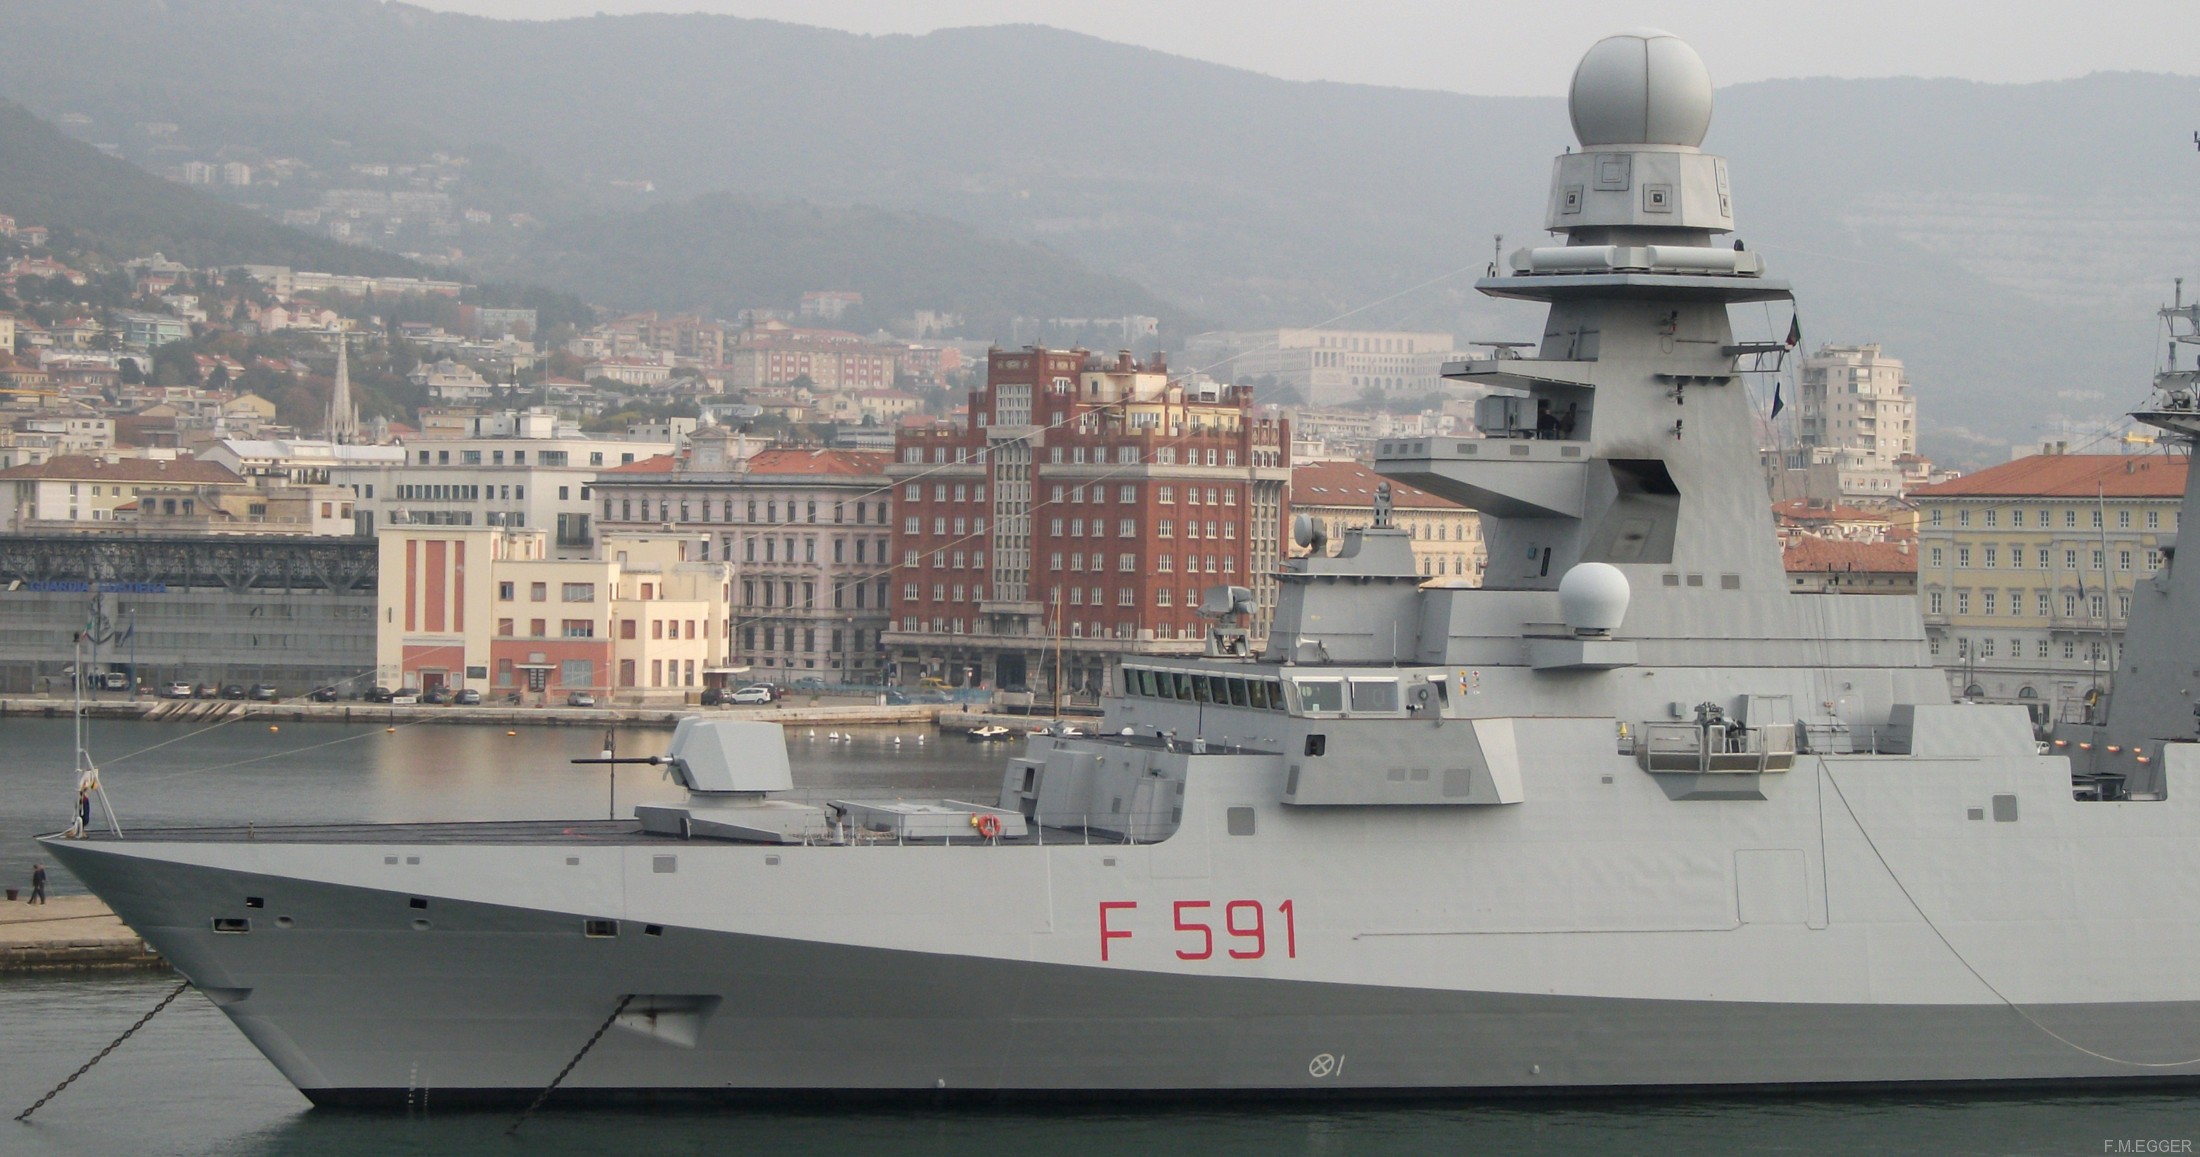 f-591 virginio fasan its nave bergamini fremm class guided missile frigate italian navy marina militare x06 trieste port